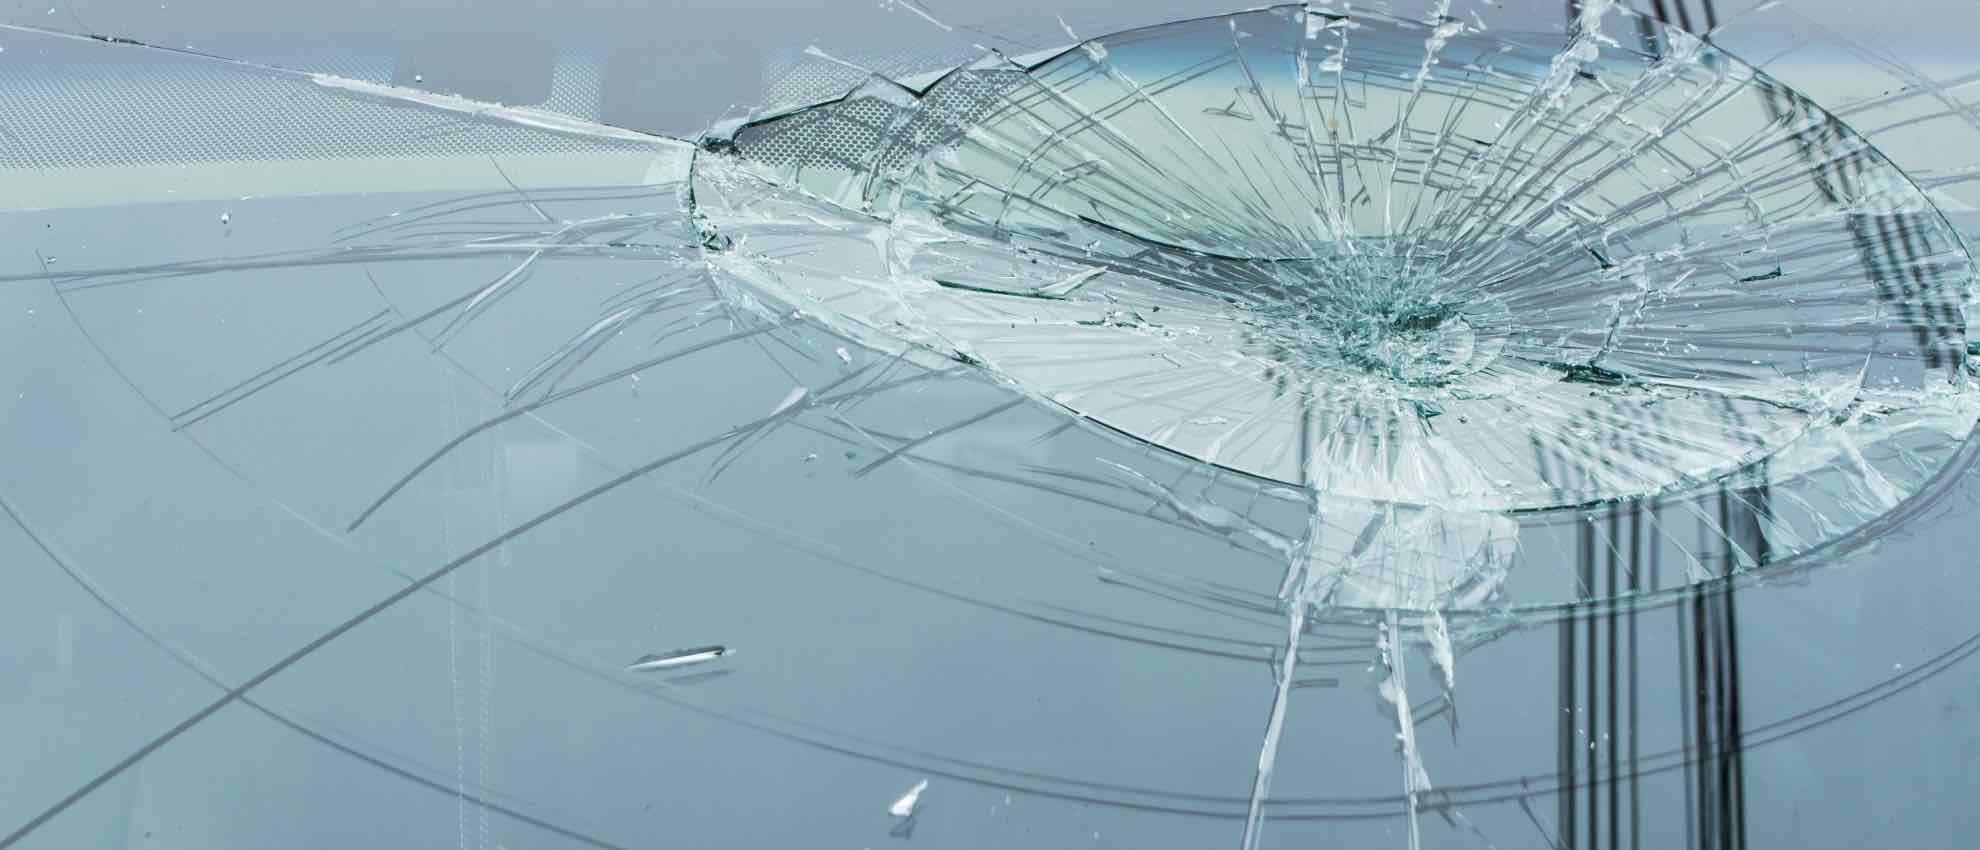 Broken car windshield